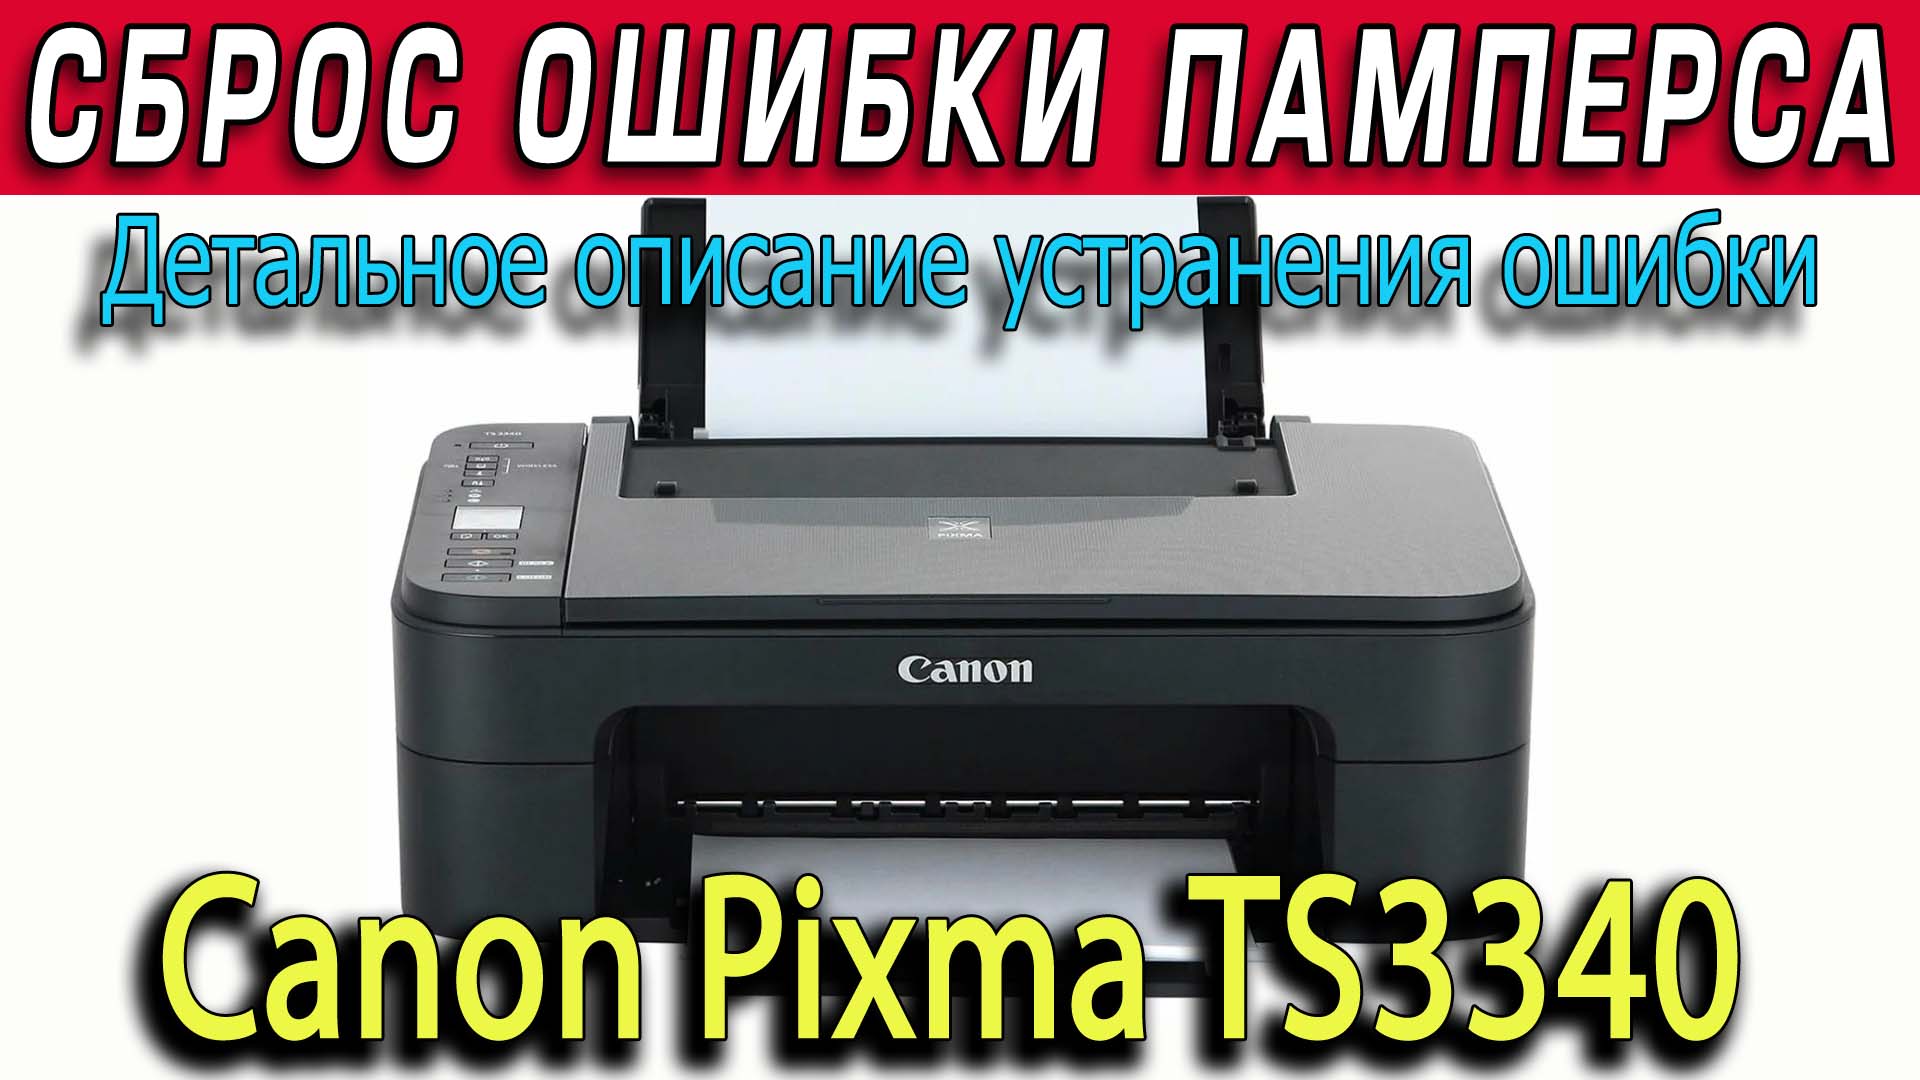 Canon Pixma TS3340 Сброc памперса, ошибки 5B00, 5B02